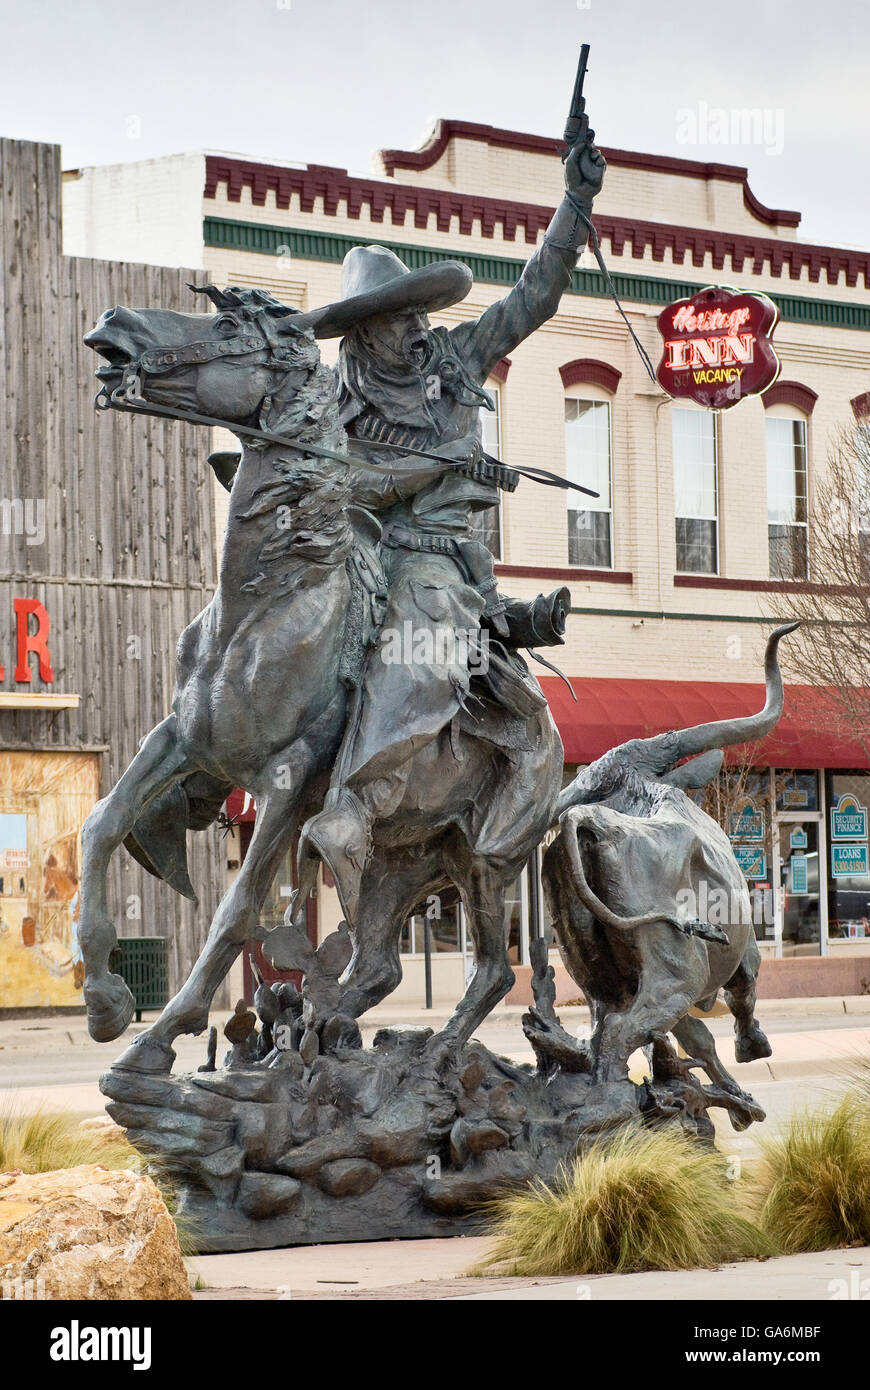 The Vaquero sculpture by Michael Hamby in Artesia, New Mexico, USA Stock Photo